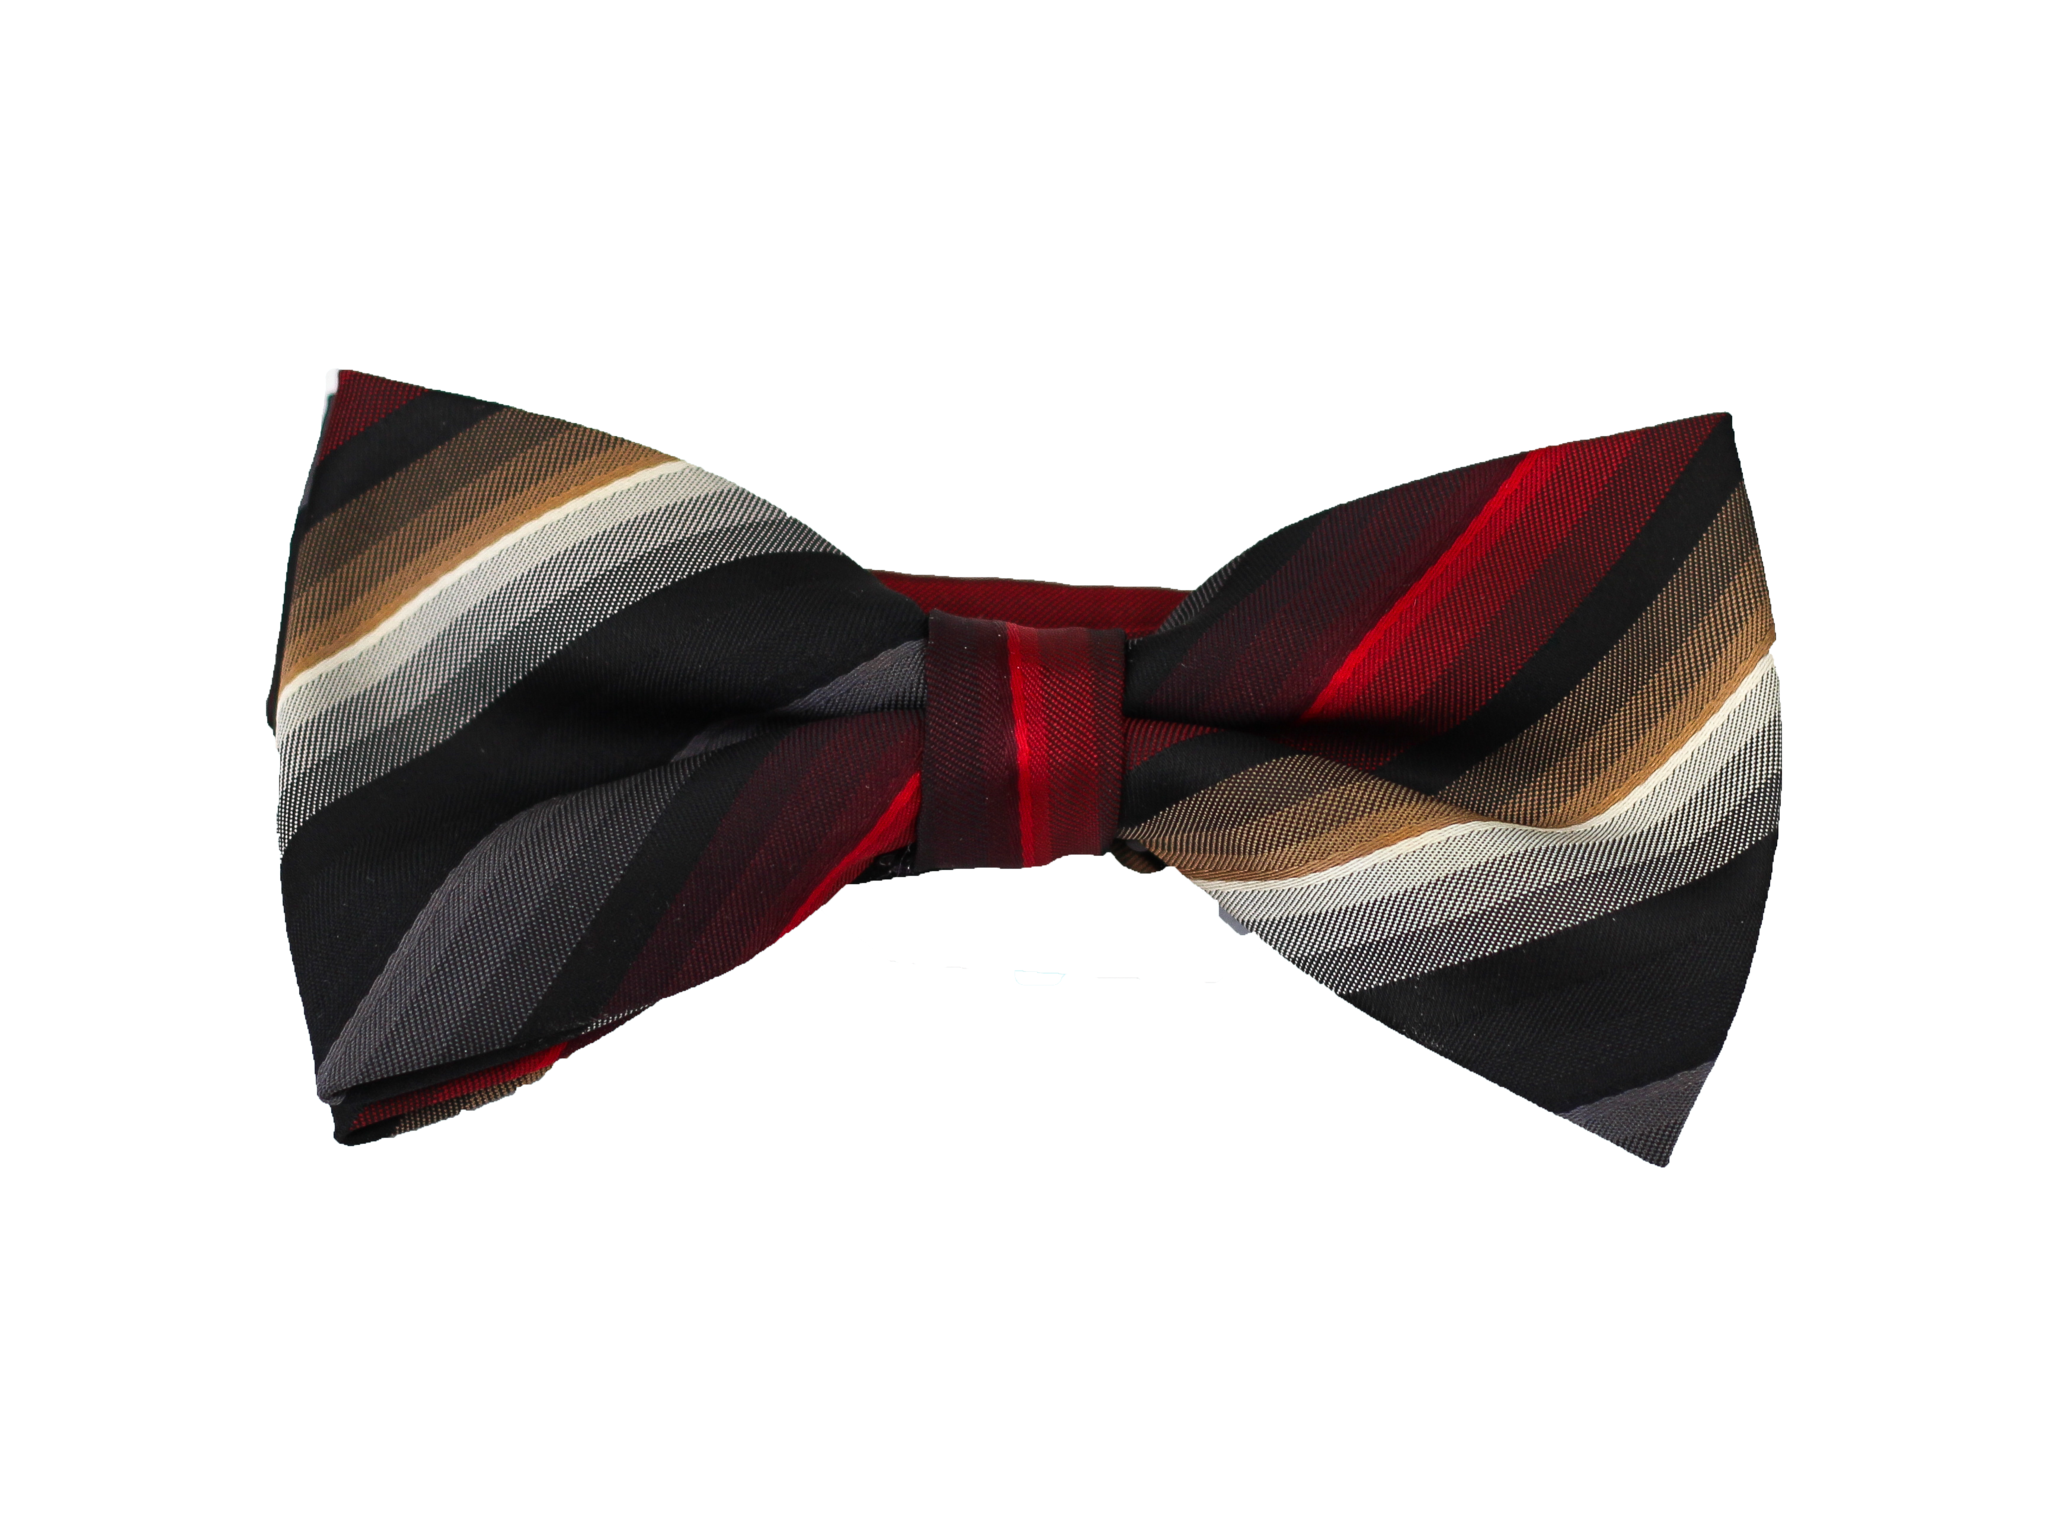 Bow Tie PNG Transparent Image